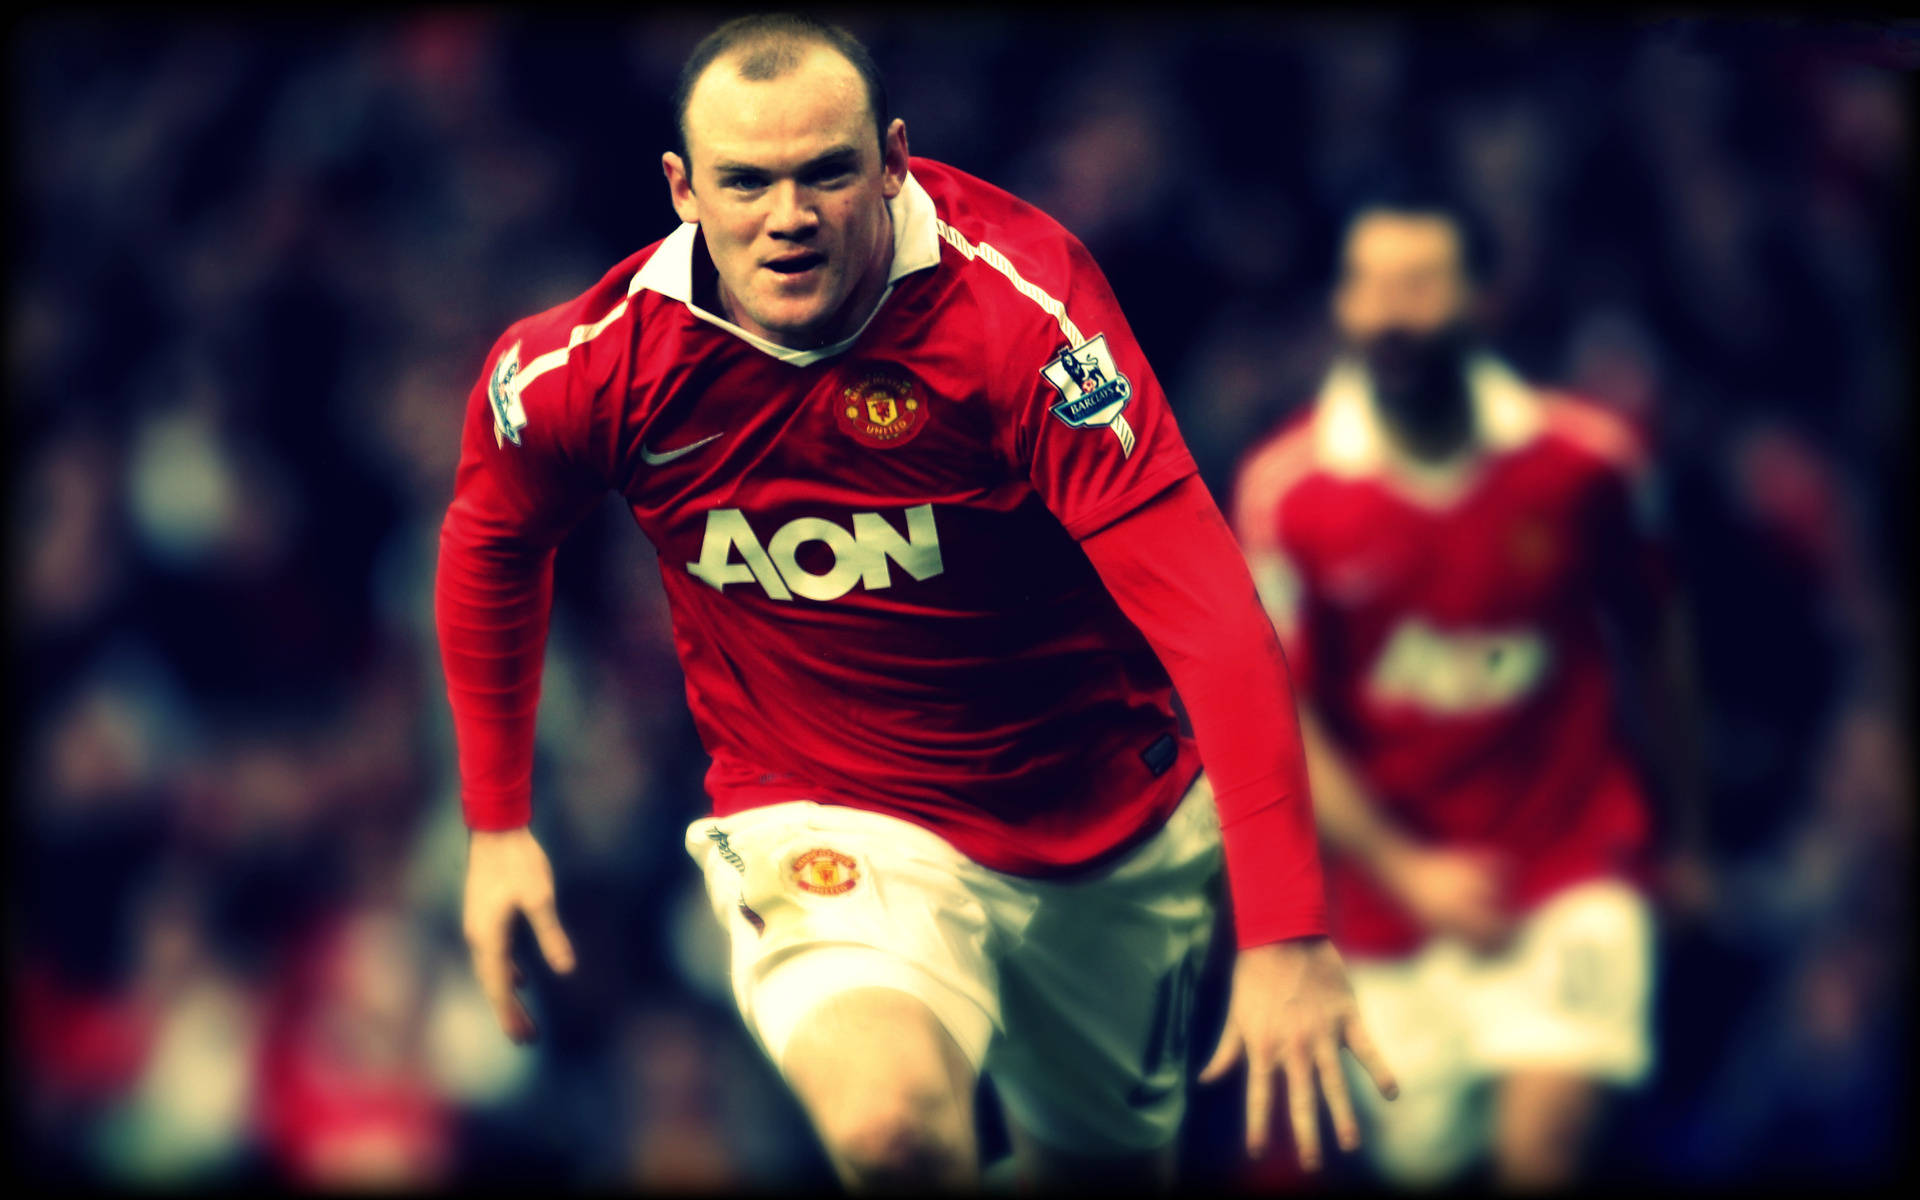 Wayne Rooney Football Player Background